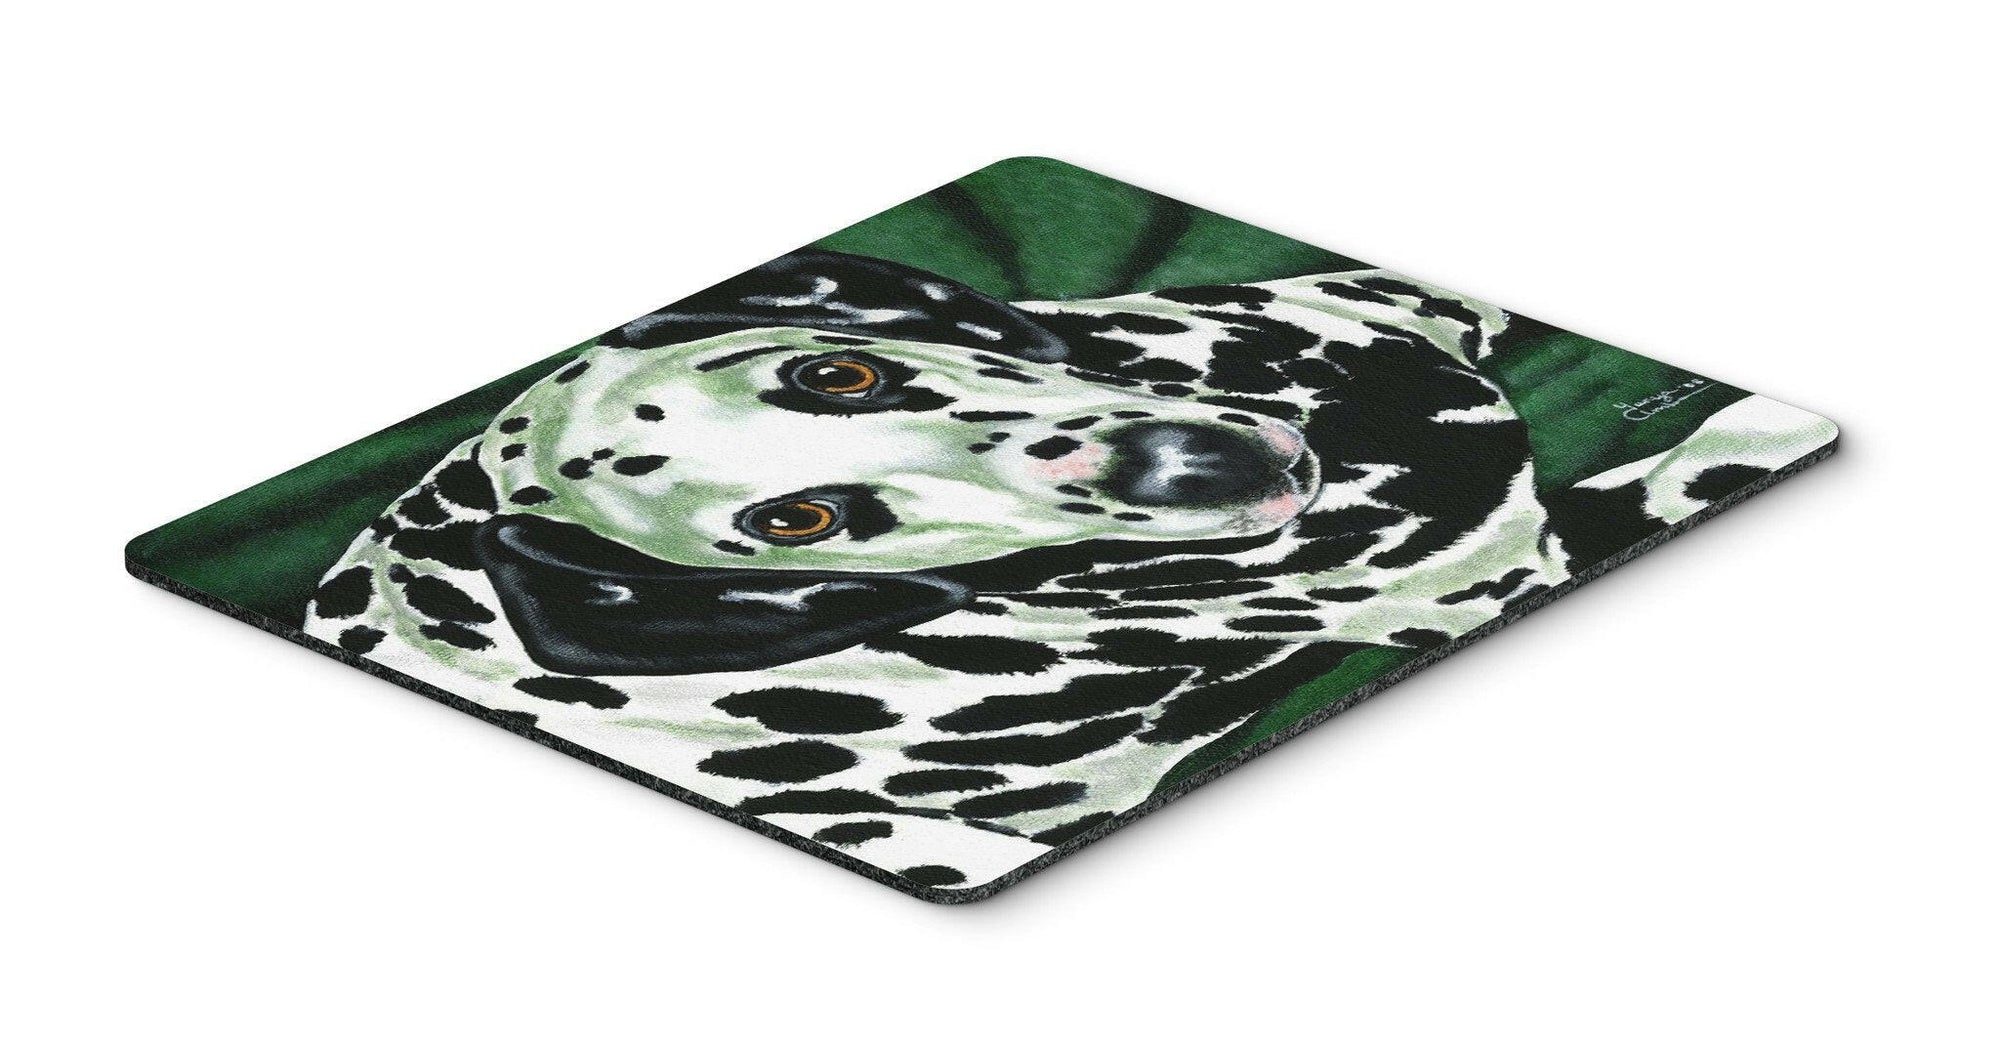 Emerald Beauty Dalmatian Mouse Pad, Hot Pad or Trivet AMB1359MP by Caroline's Treasures